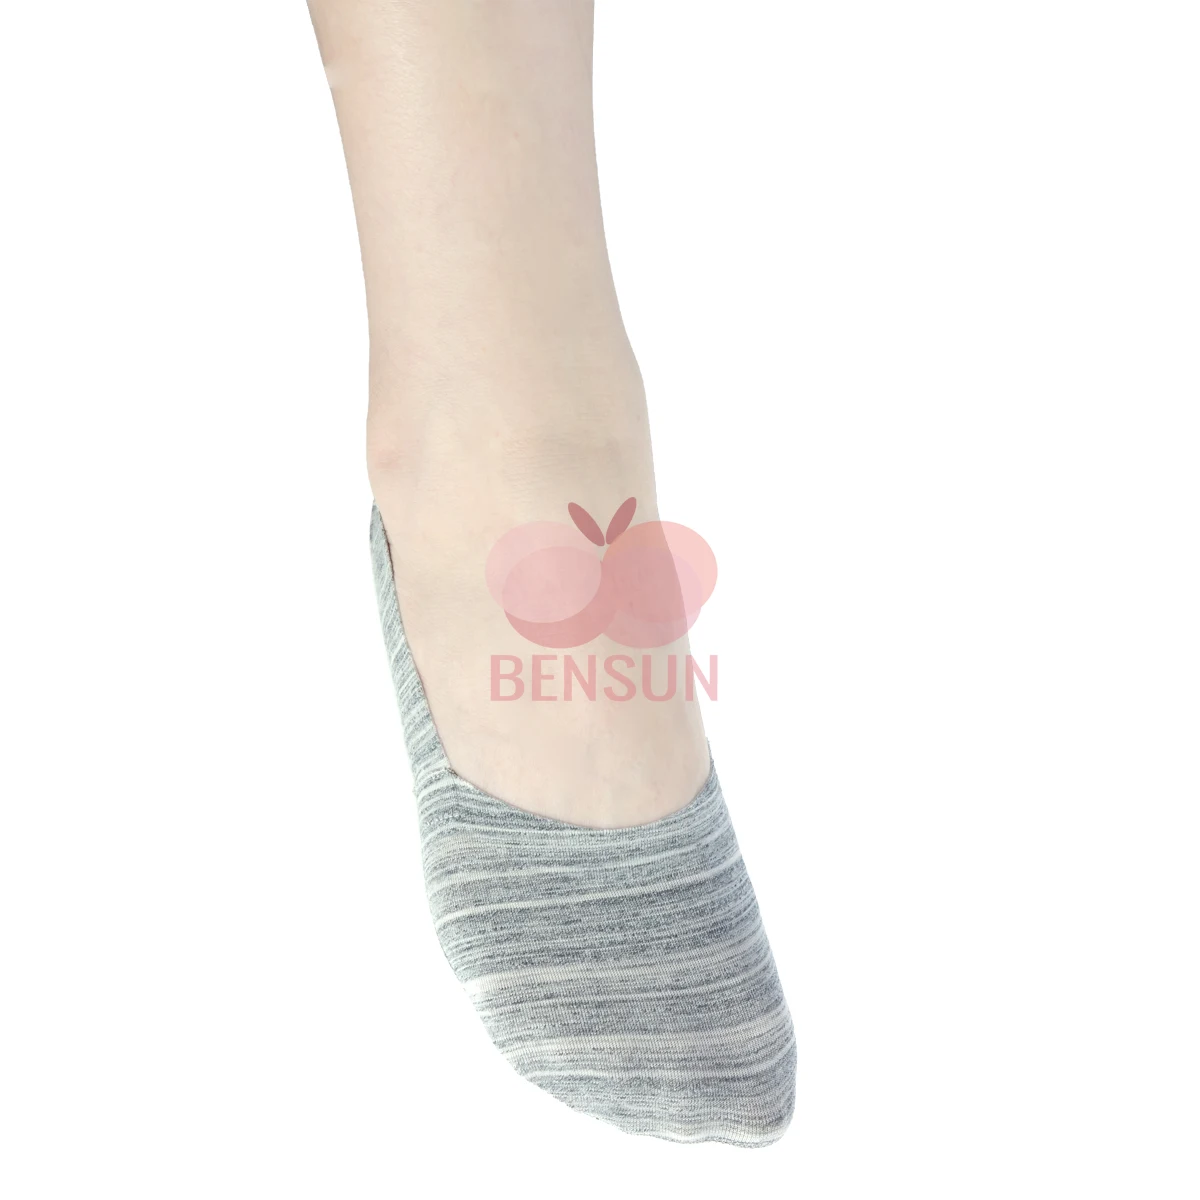 Invisible Boat Socks Non-slip Silicone Combed Cotton Spandex Blend Fashion Women Ankle No Show Socks